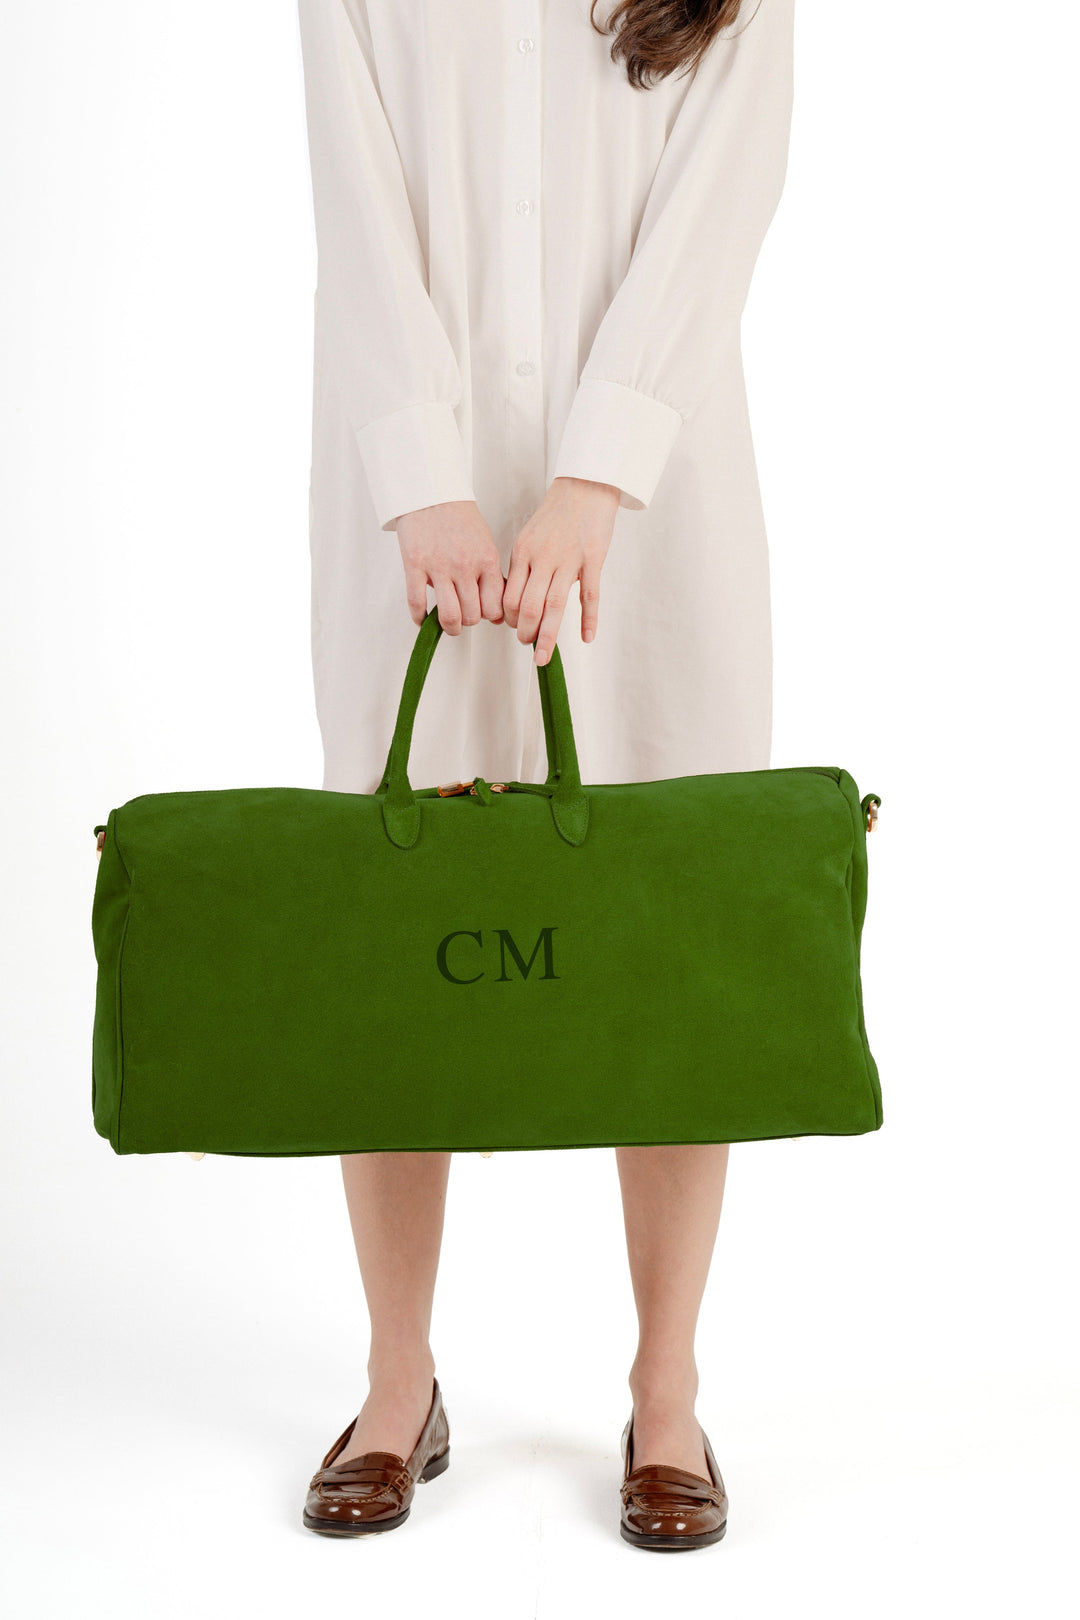 Woman holding large green monogrammed travel bag